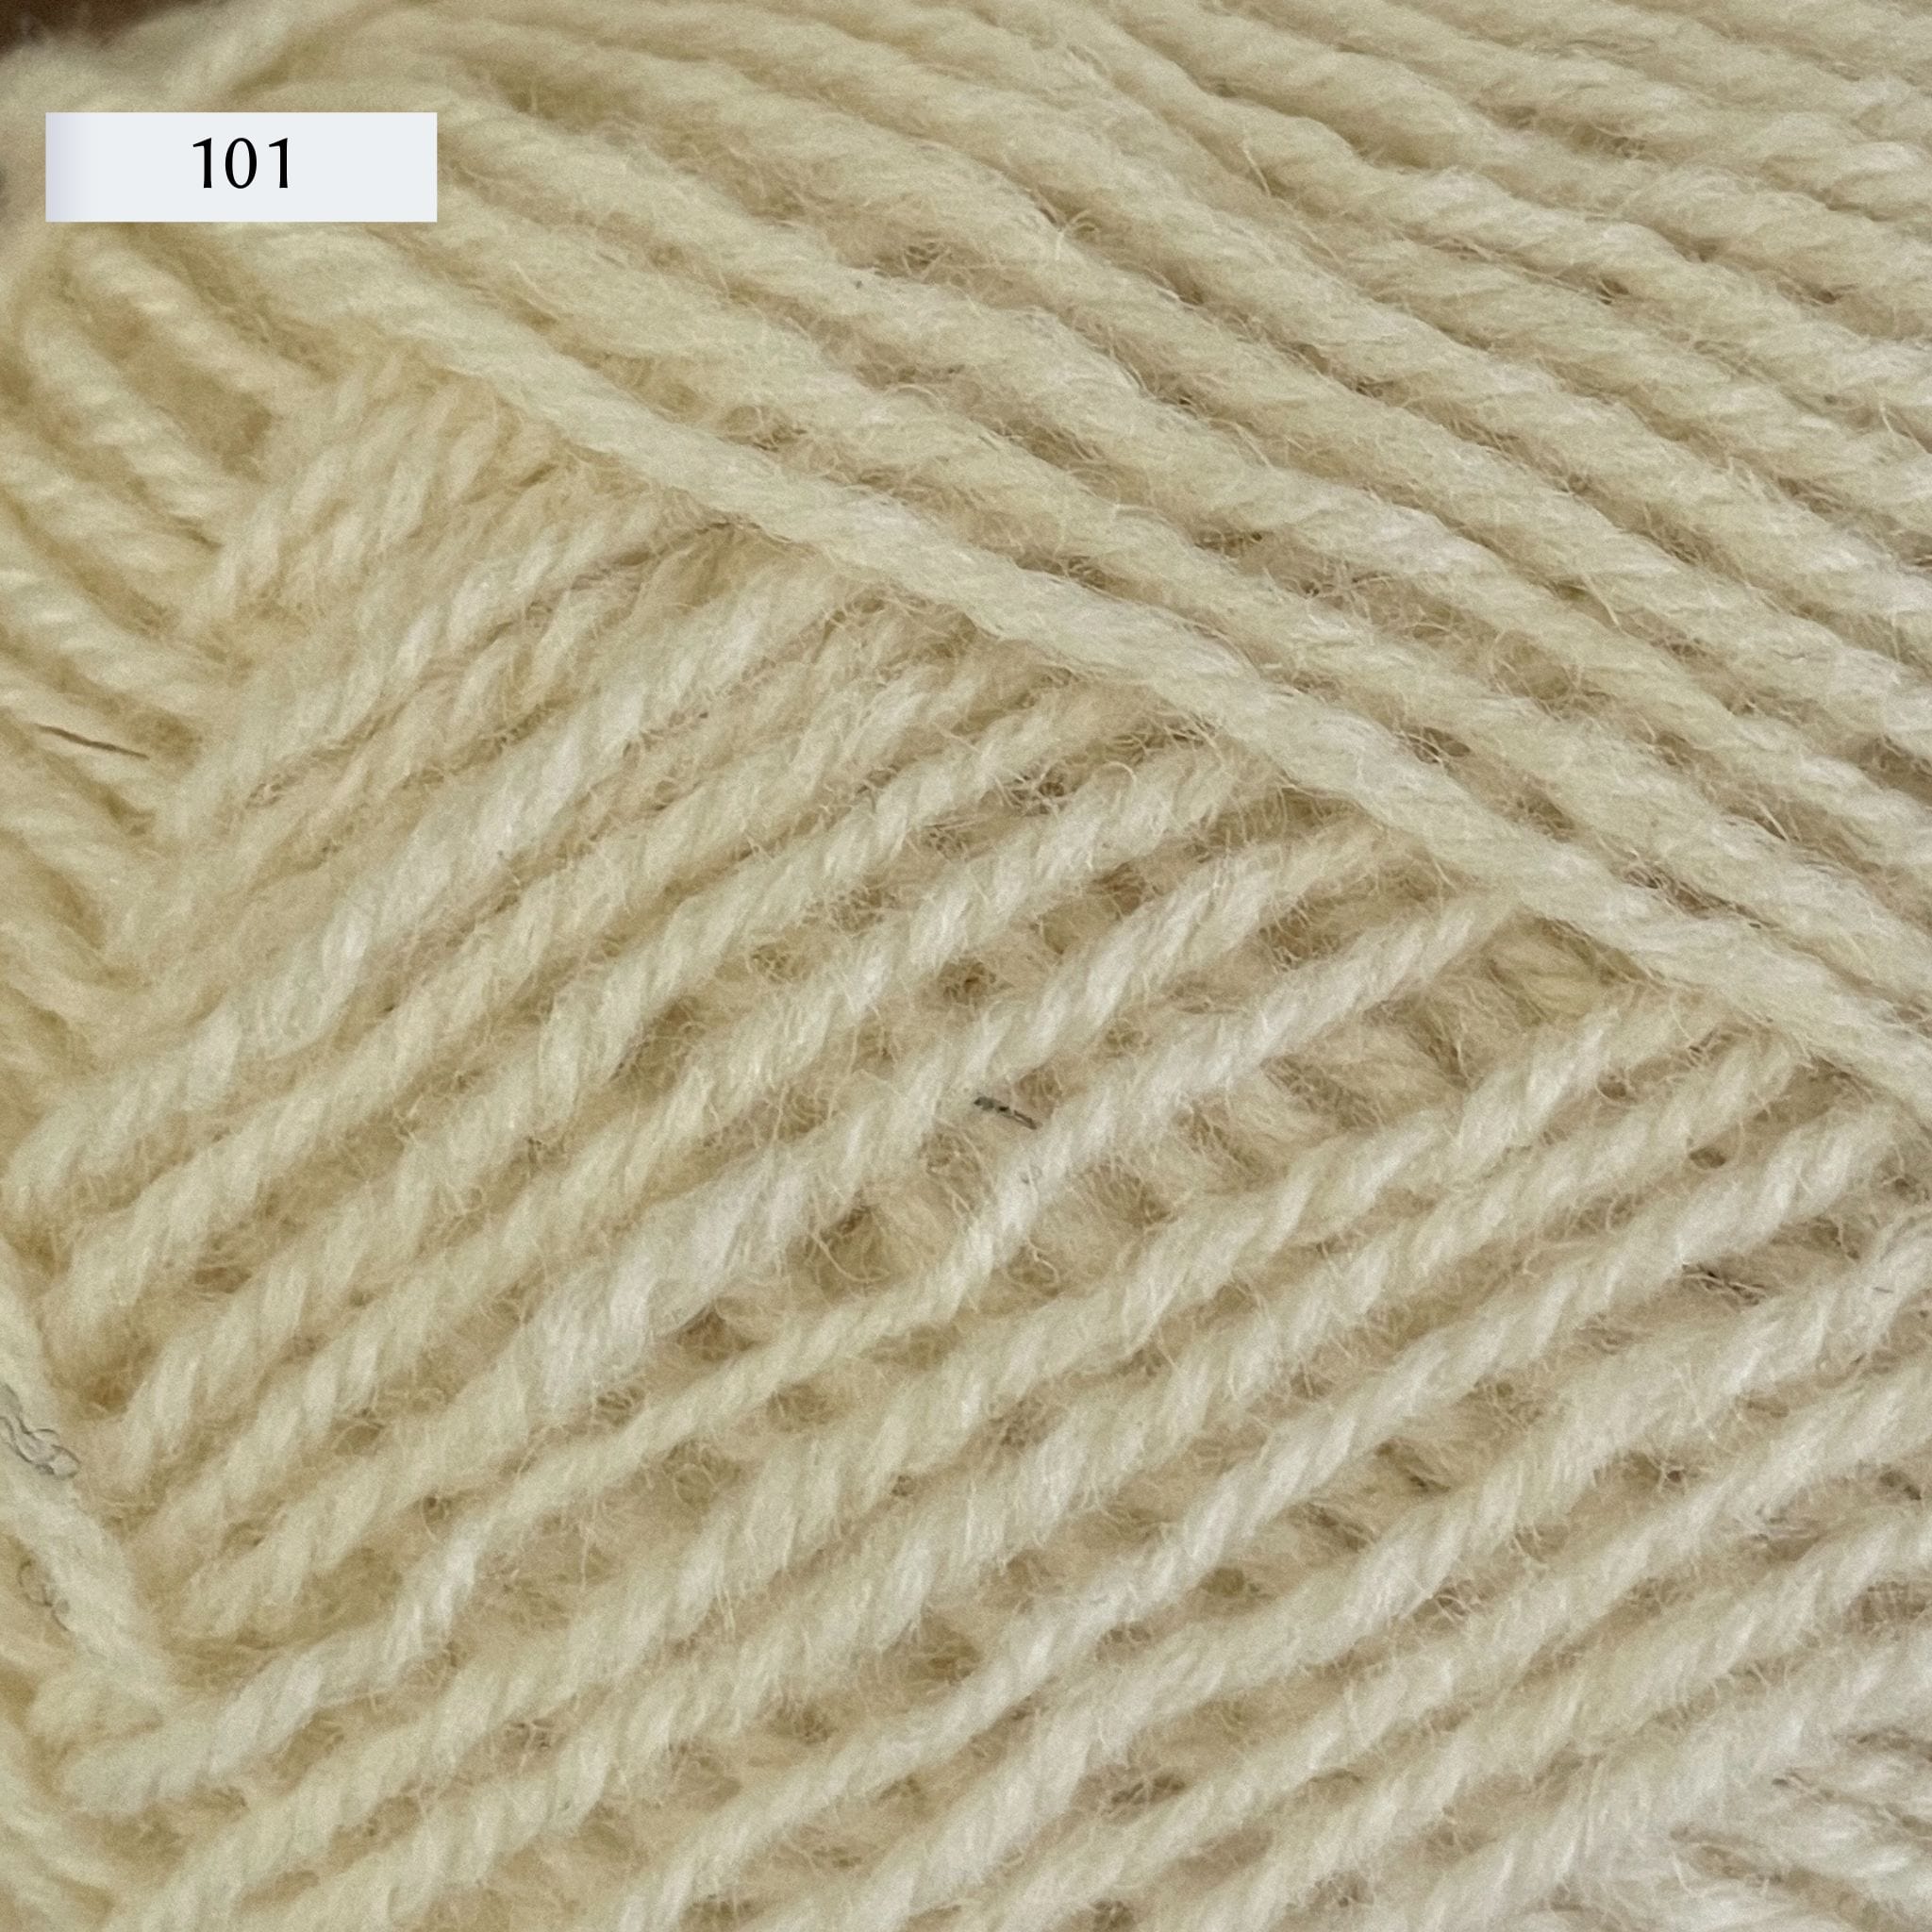 Rauma Strikkegarn, DK weight yarn, in color 101, natural